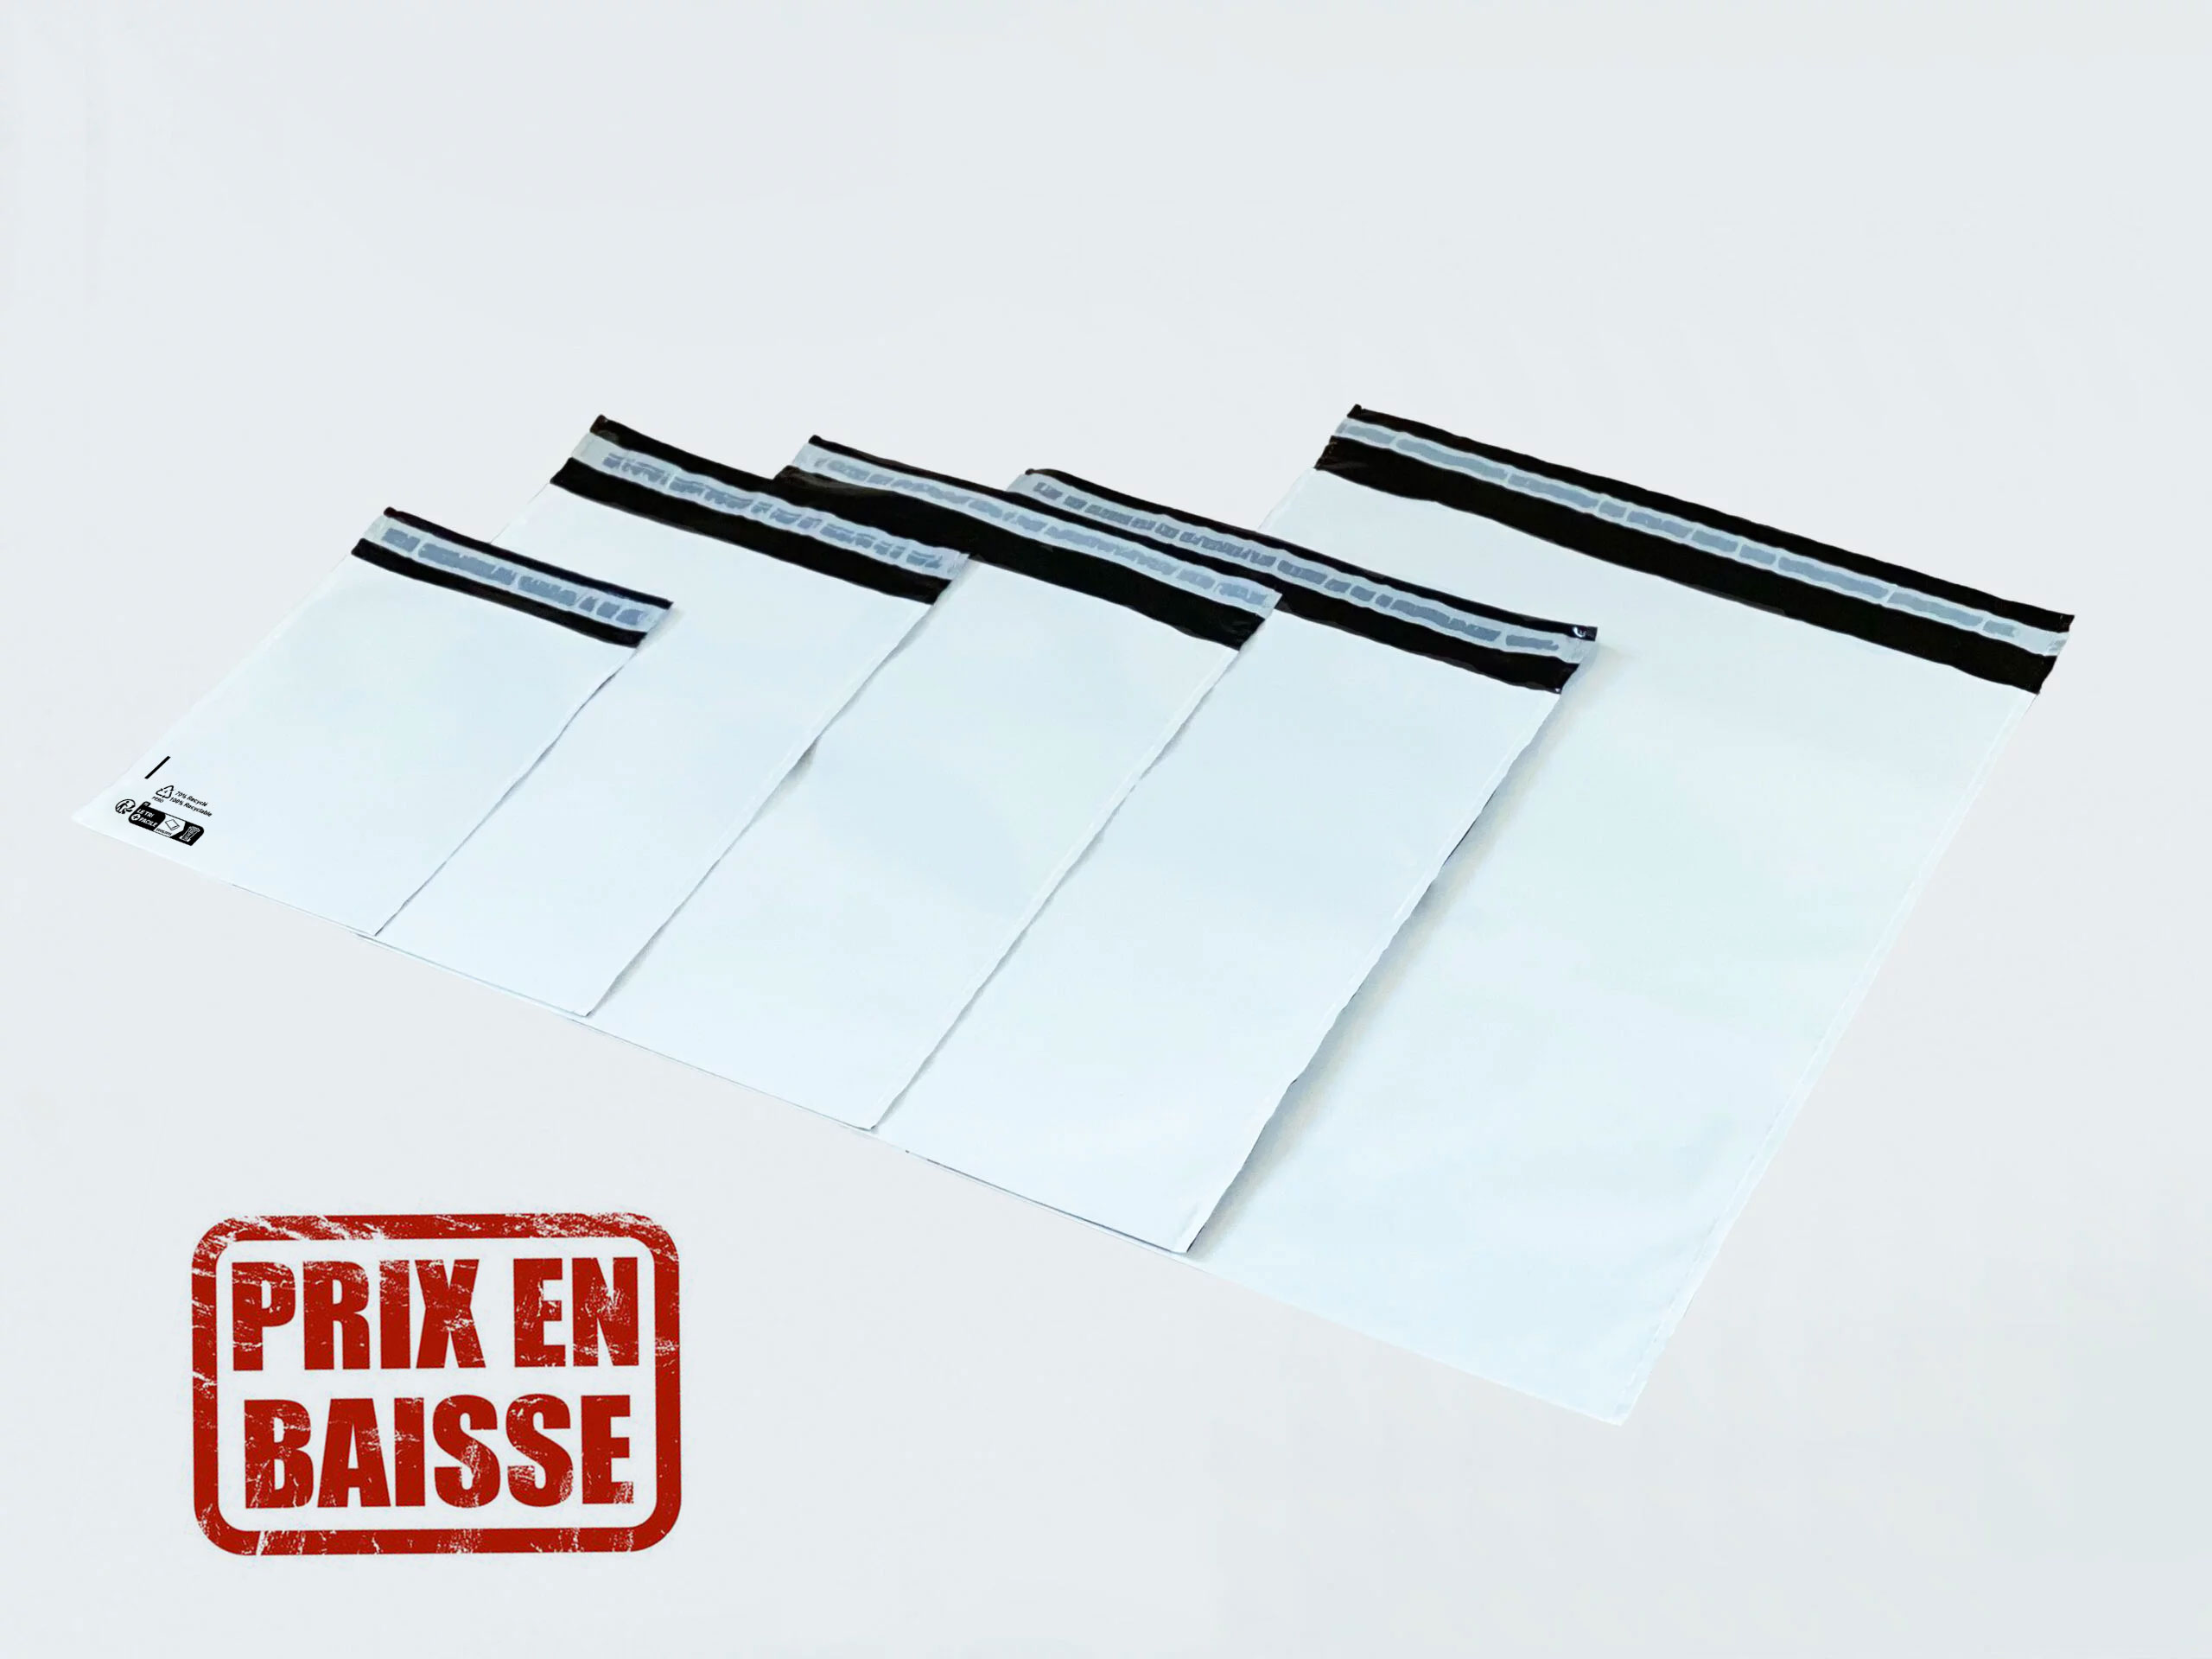 250 Enveloppes plastique opaques 80 microns N°4 335x410mm - Harry plast